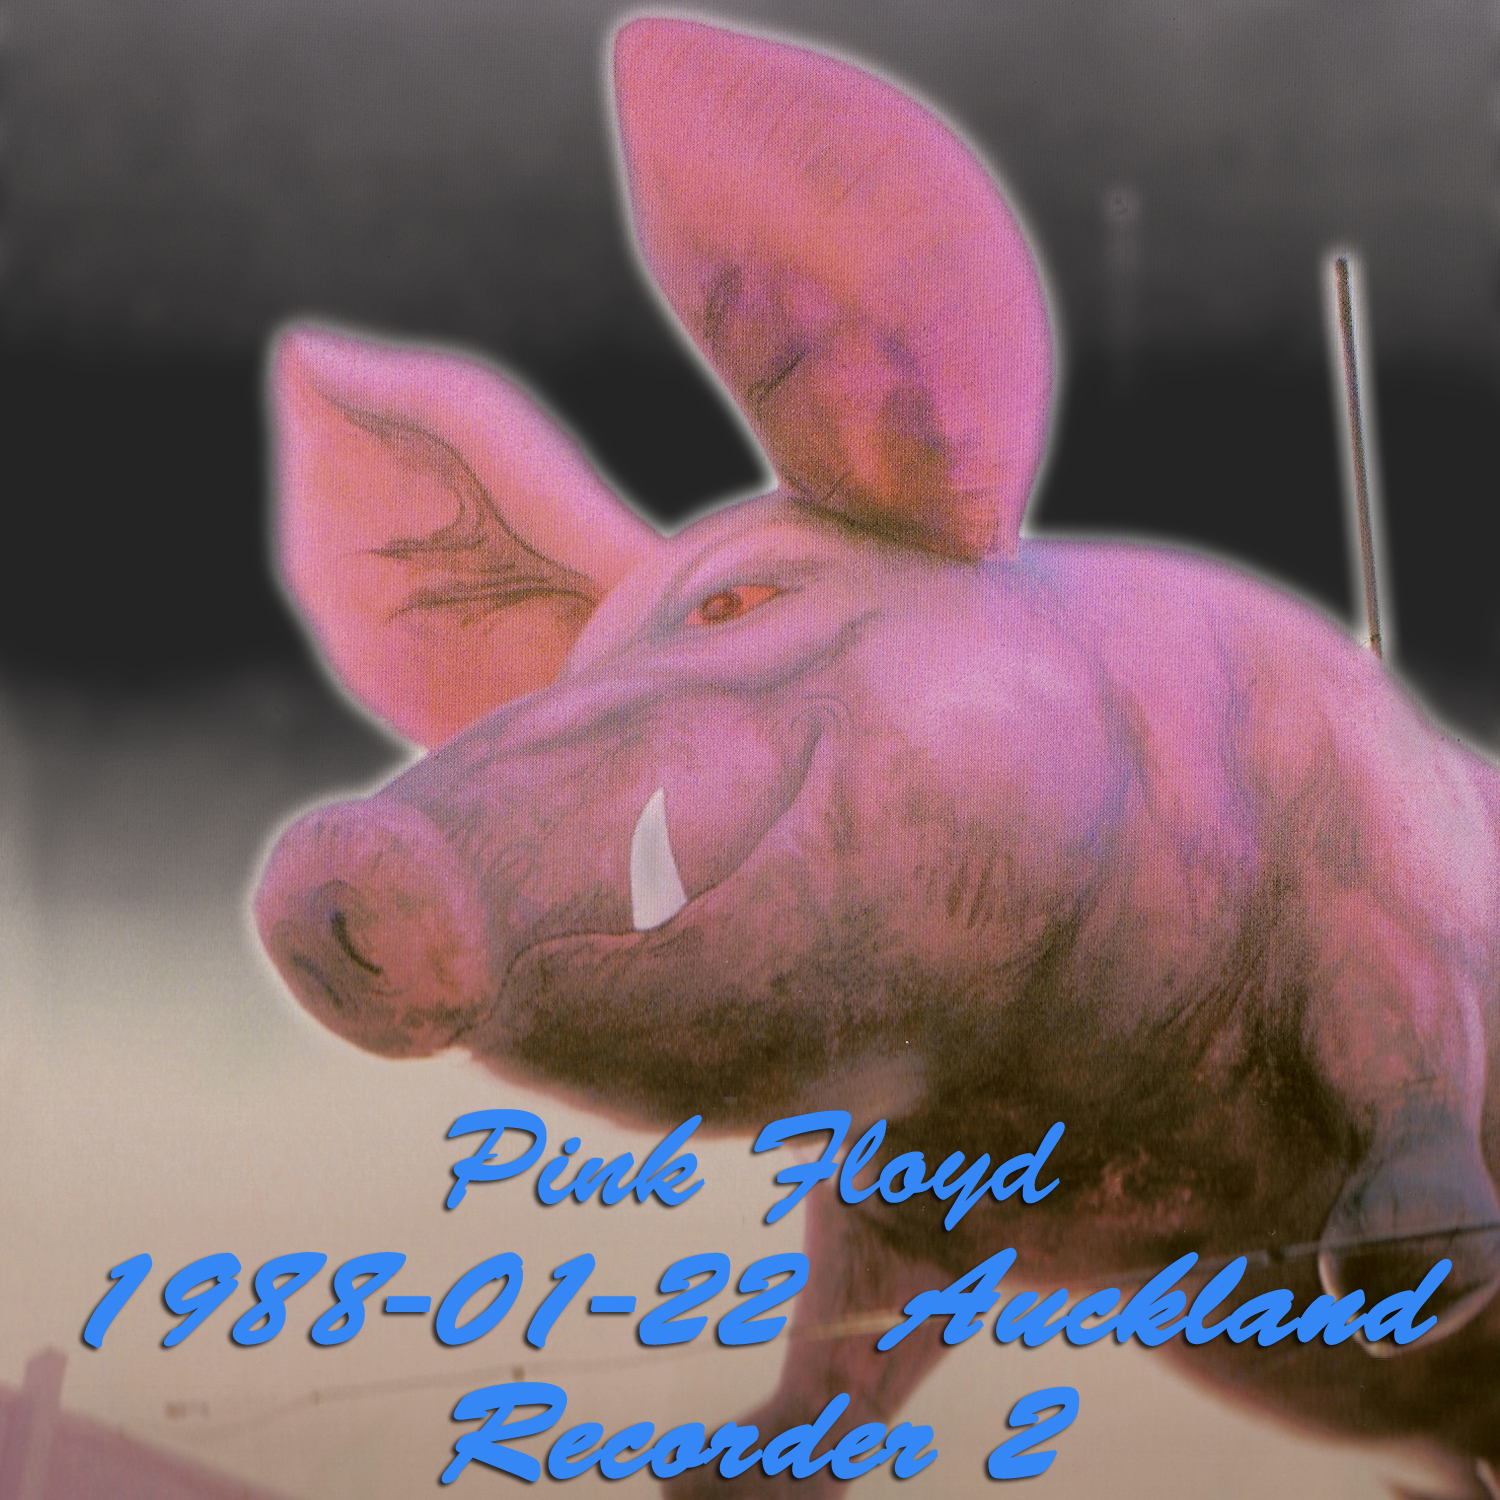 PinkFloyd1988-01-22WesternSpringsAucklandNewZealand. (2).jpg